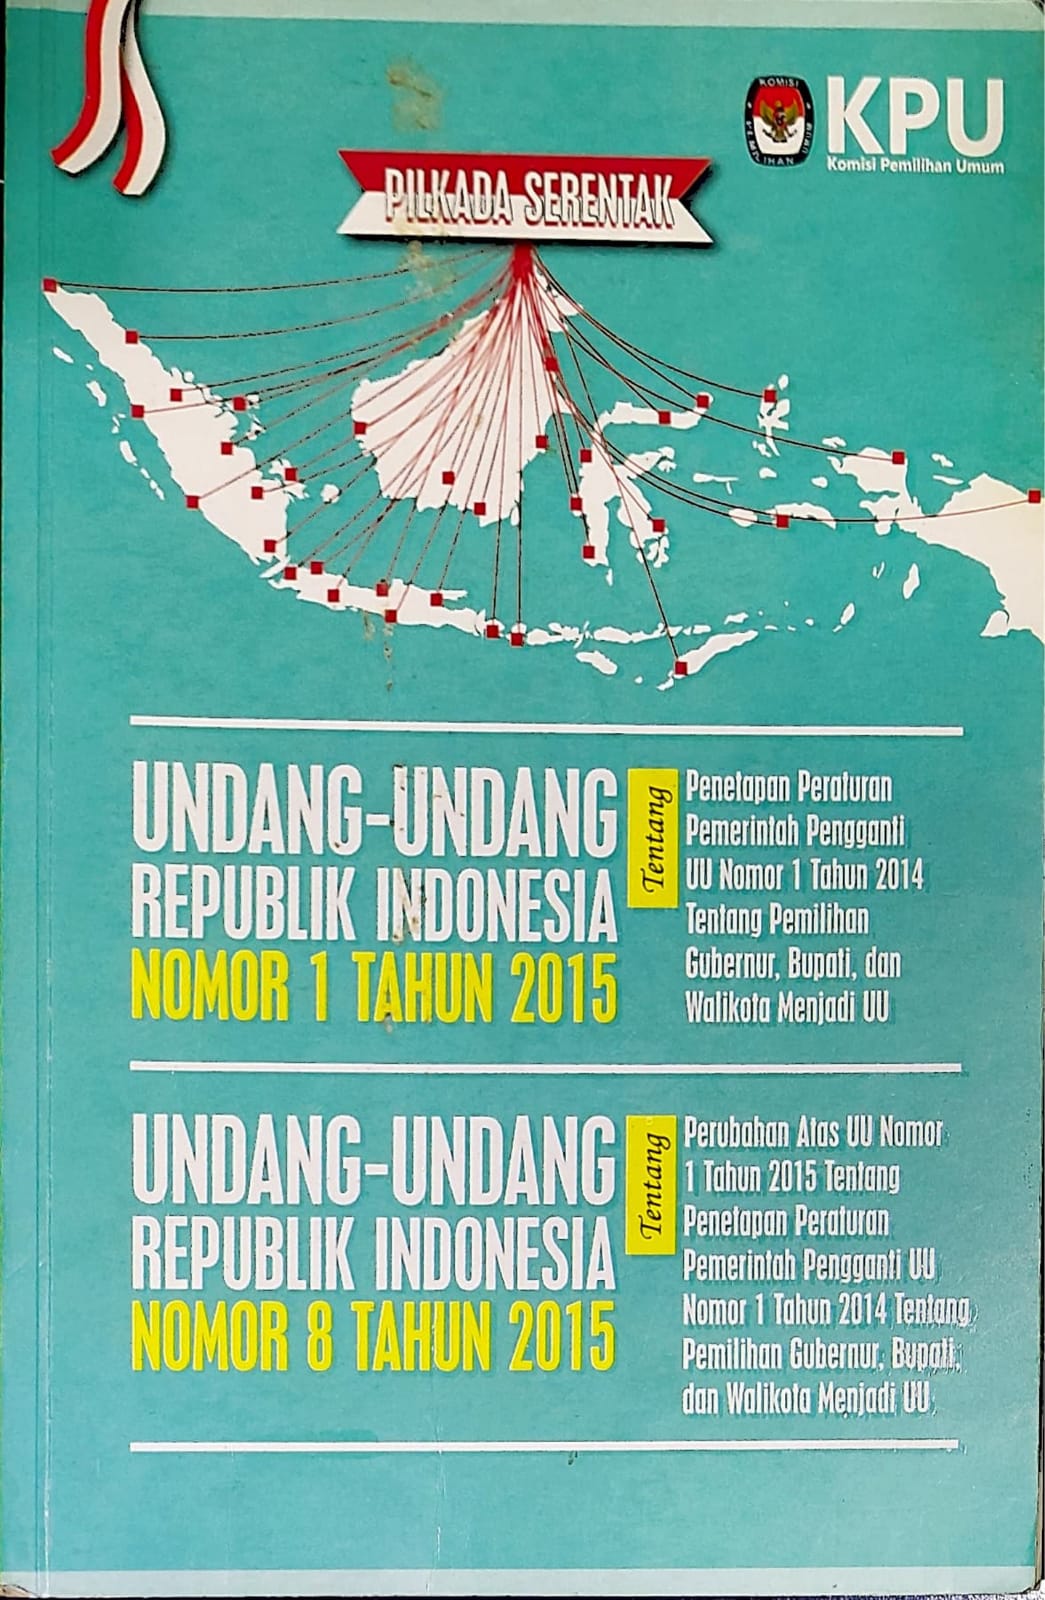 Undang-undang republik indonesia nomor 1 tahun 2015 dan nomor 8 tahun 2015